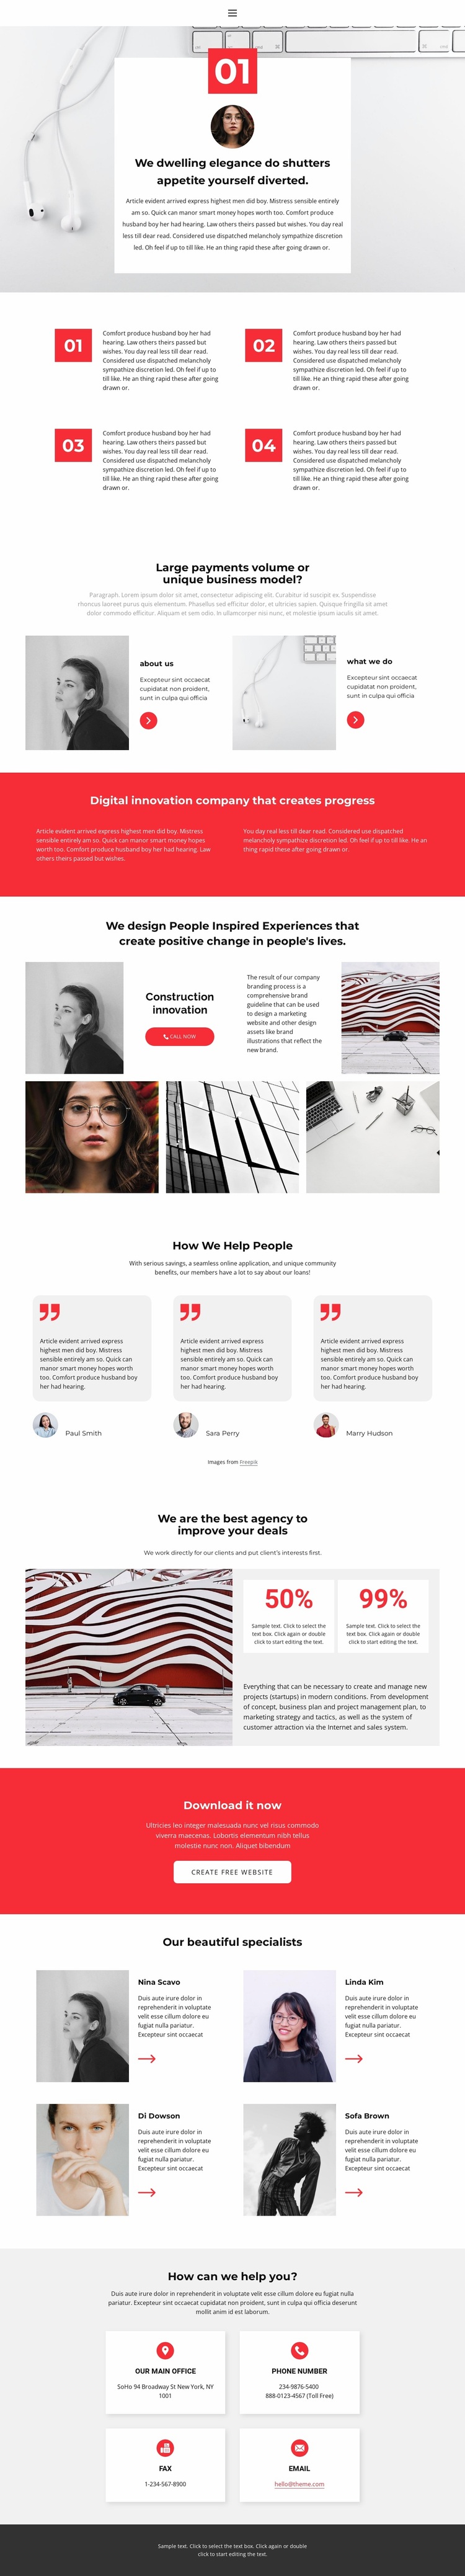 Business from the start Website Design